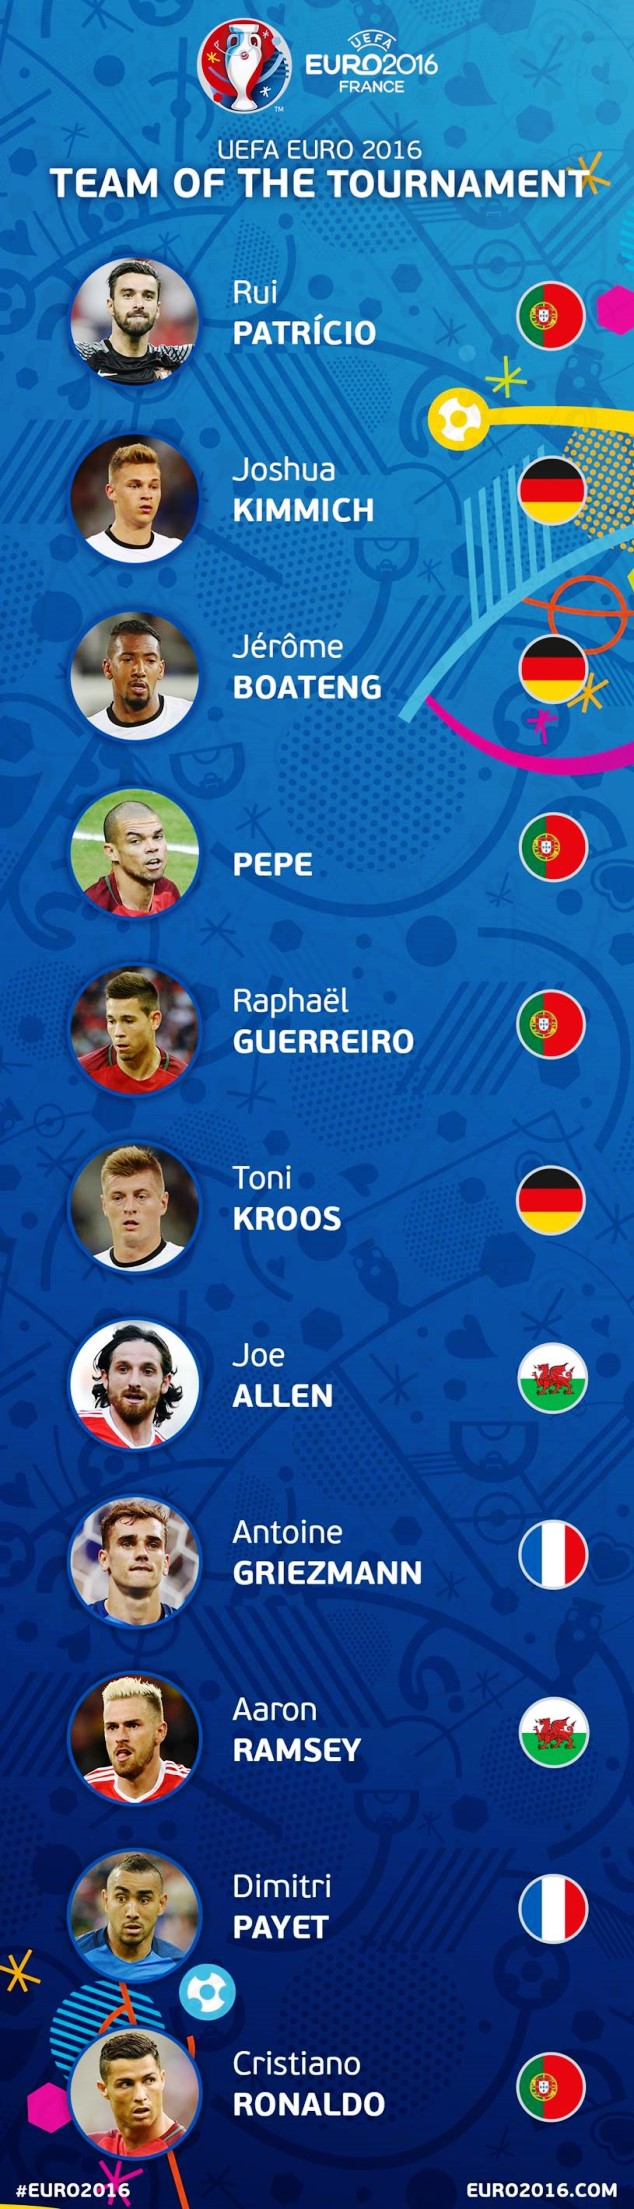 UEFA Euro 2016 team of the tournament - Best XI